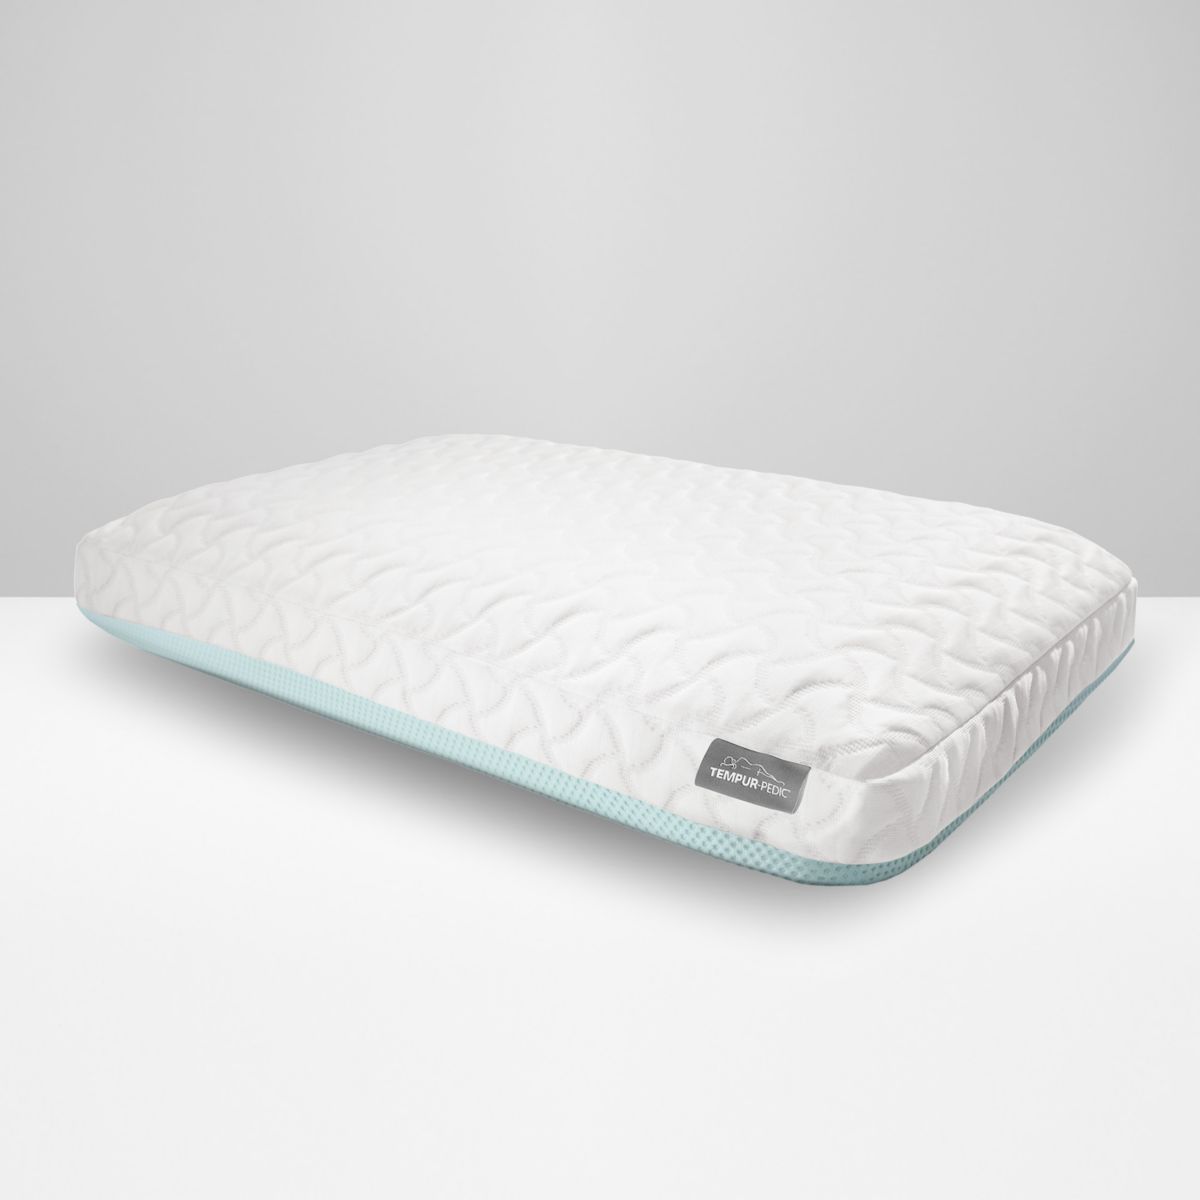 Tempur-Pedic Cloud + Cool Touch Pillow Tempur-Pedic